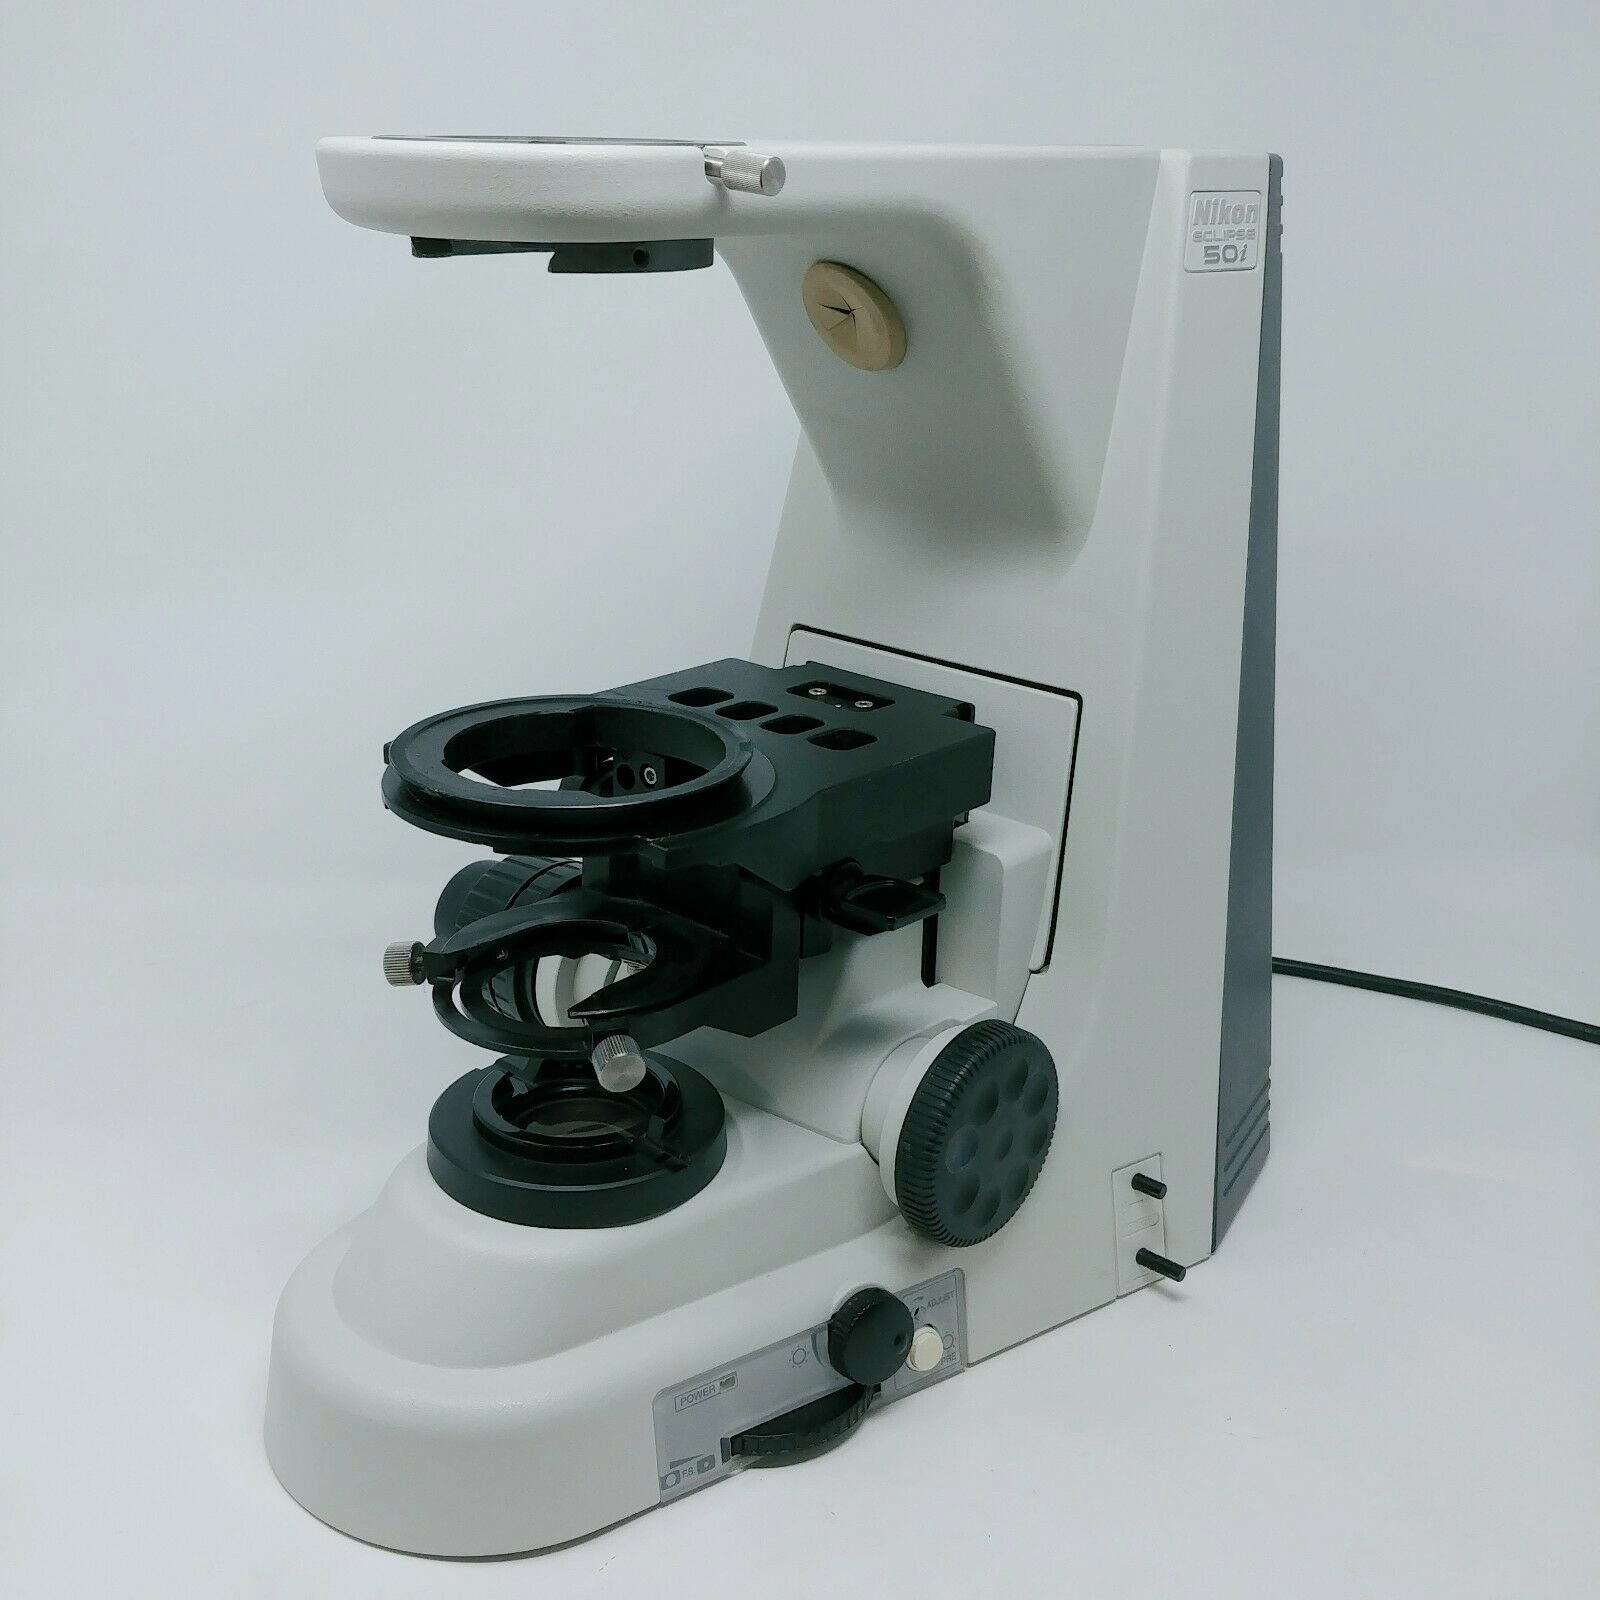 Nikon Microscope Eclipse 50i Stand